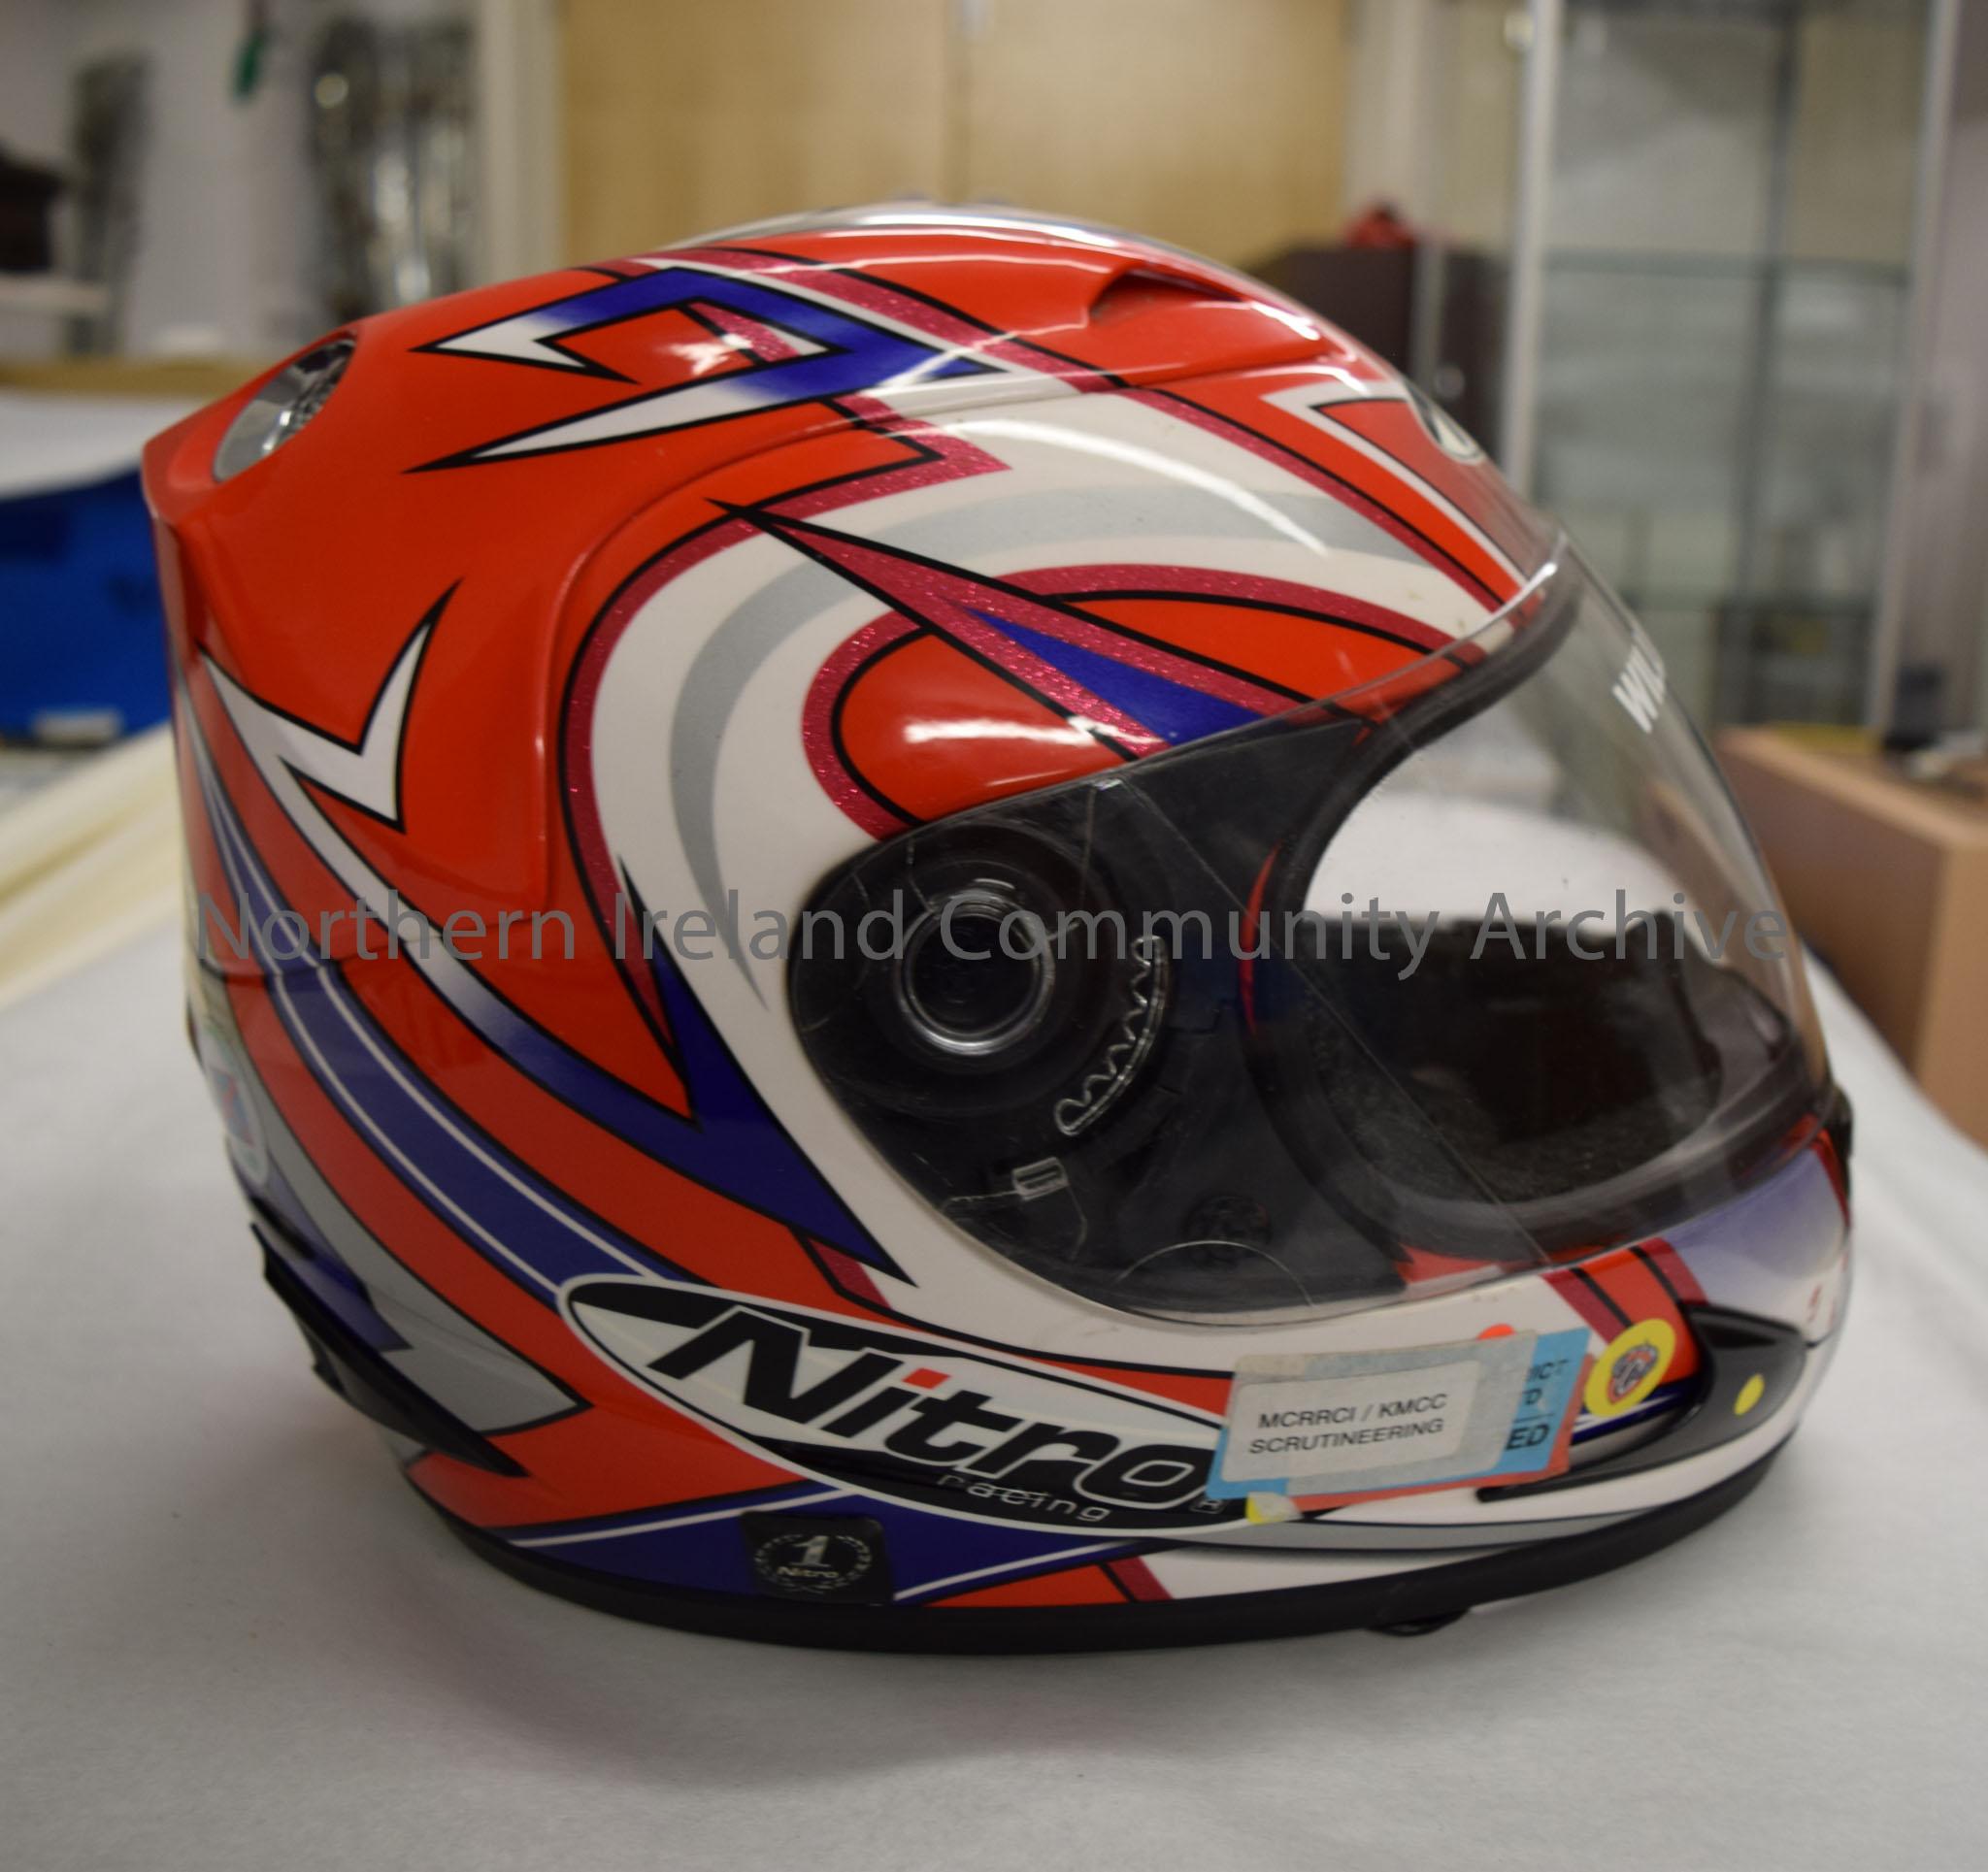 Nitro Racing motorcycle helmet belonging to William Morrell. Red helmet with white, grey and dark blue pattern. – 2016.50 (5)